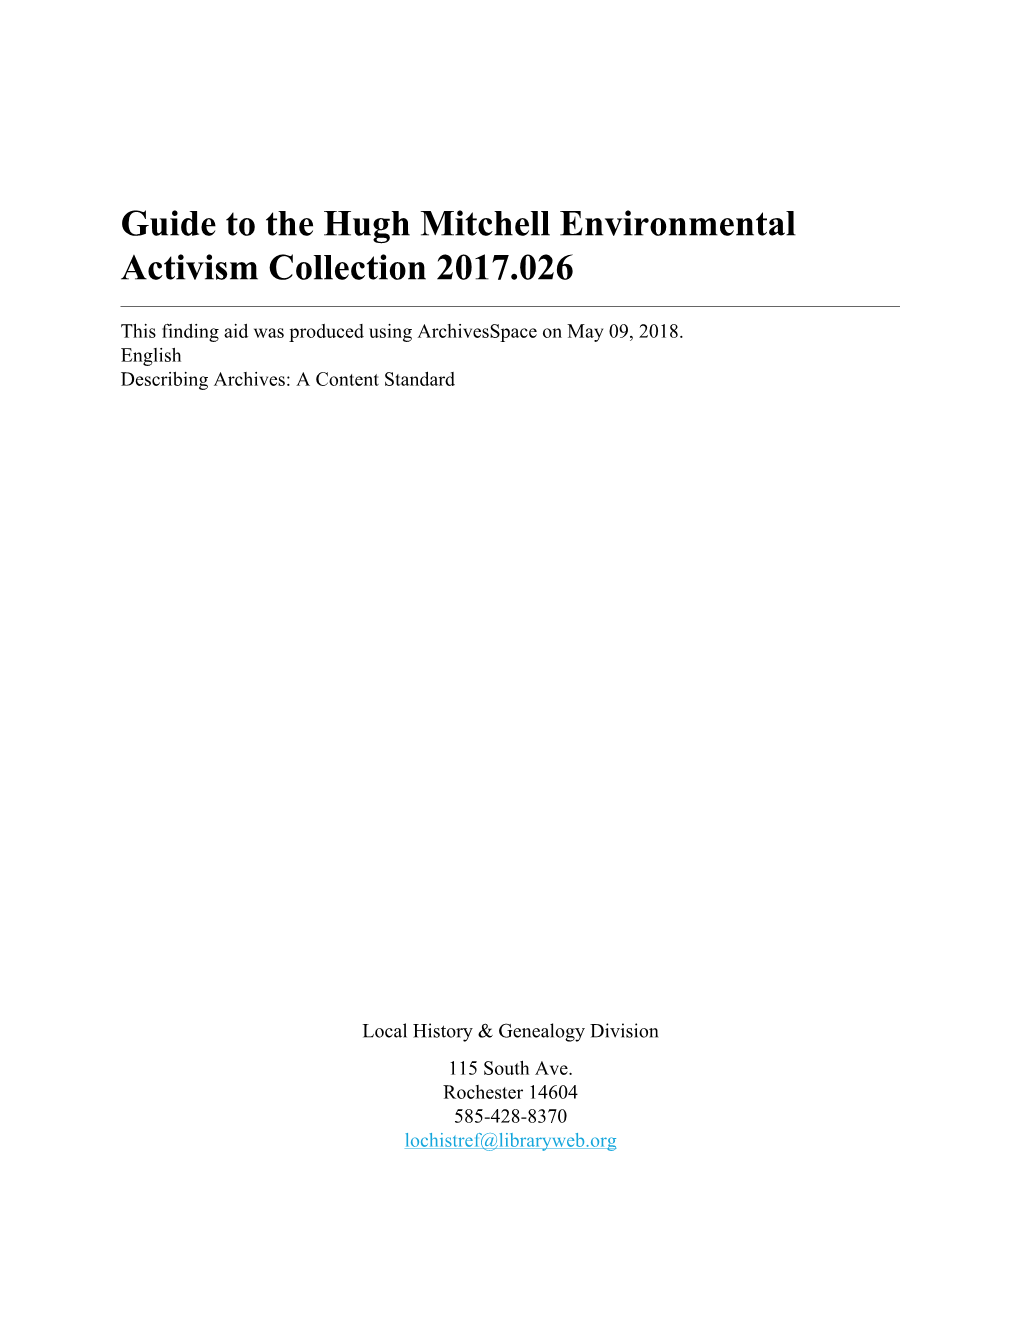 Hugh Mitchell Environmental Activism Collection 2017.026